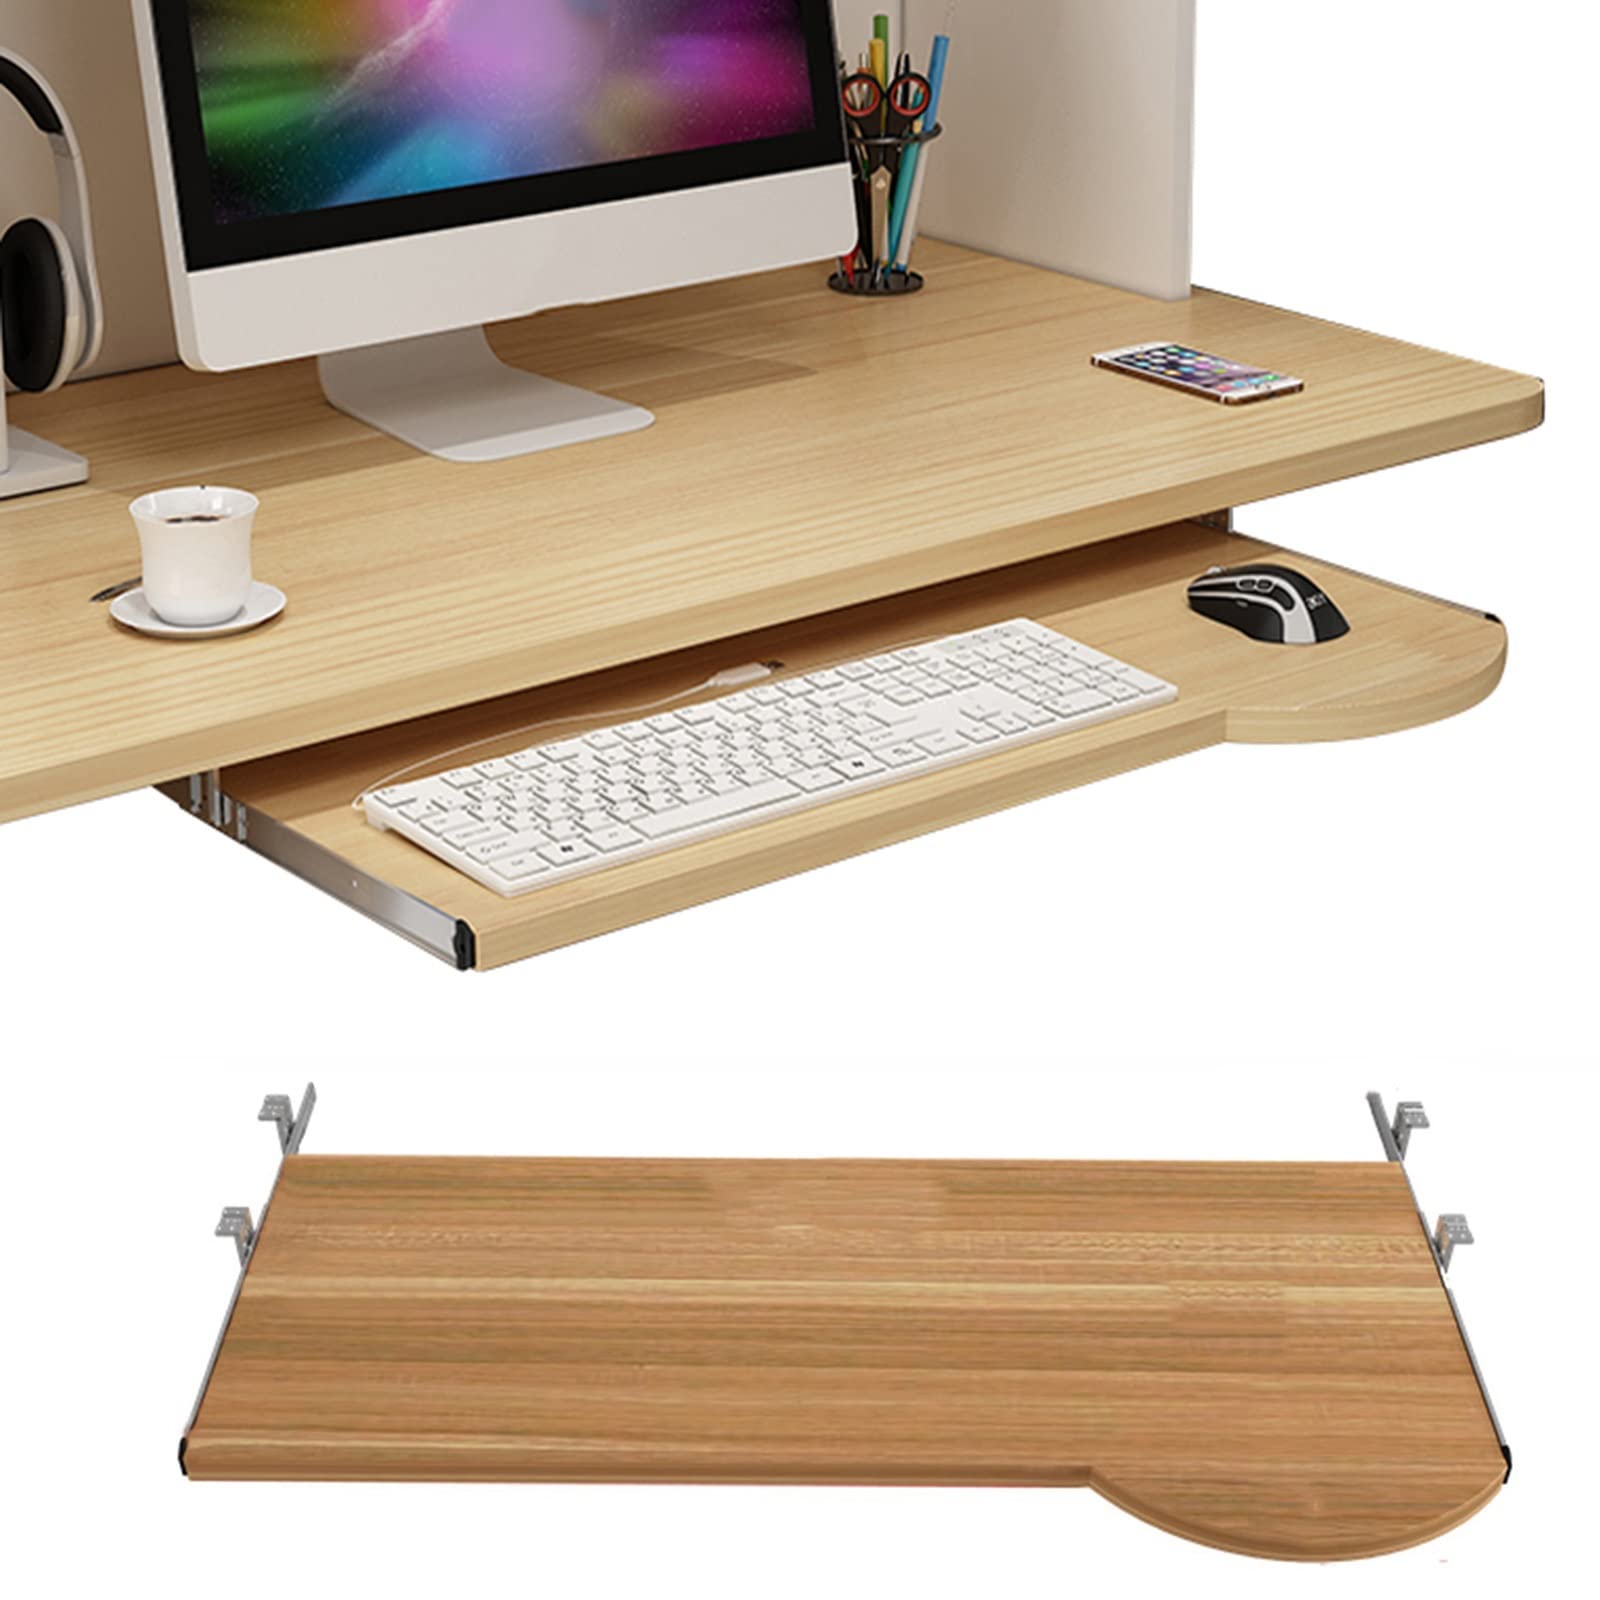 V3VOGUE Wooden Keyboard Tray Under Desk Push-Pull Keyboard Holder - Ergonomic Desk Extender Bracket 600/700x260mm, Improve Sitting Posture, Protection Eyesight, Slide Keyboard Drawer